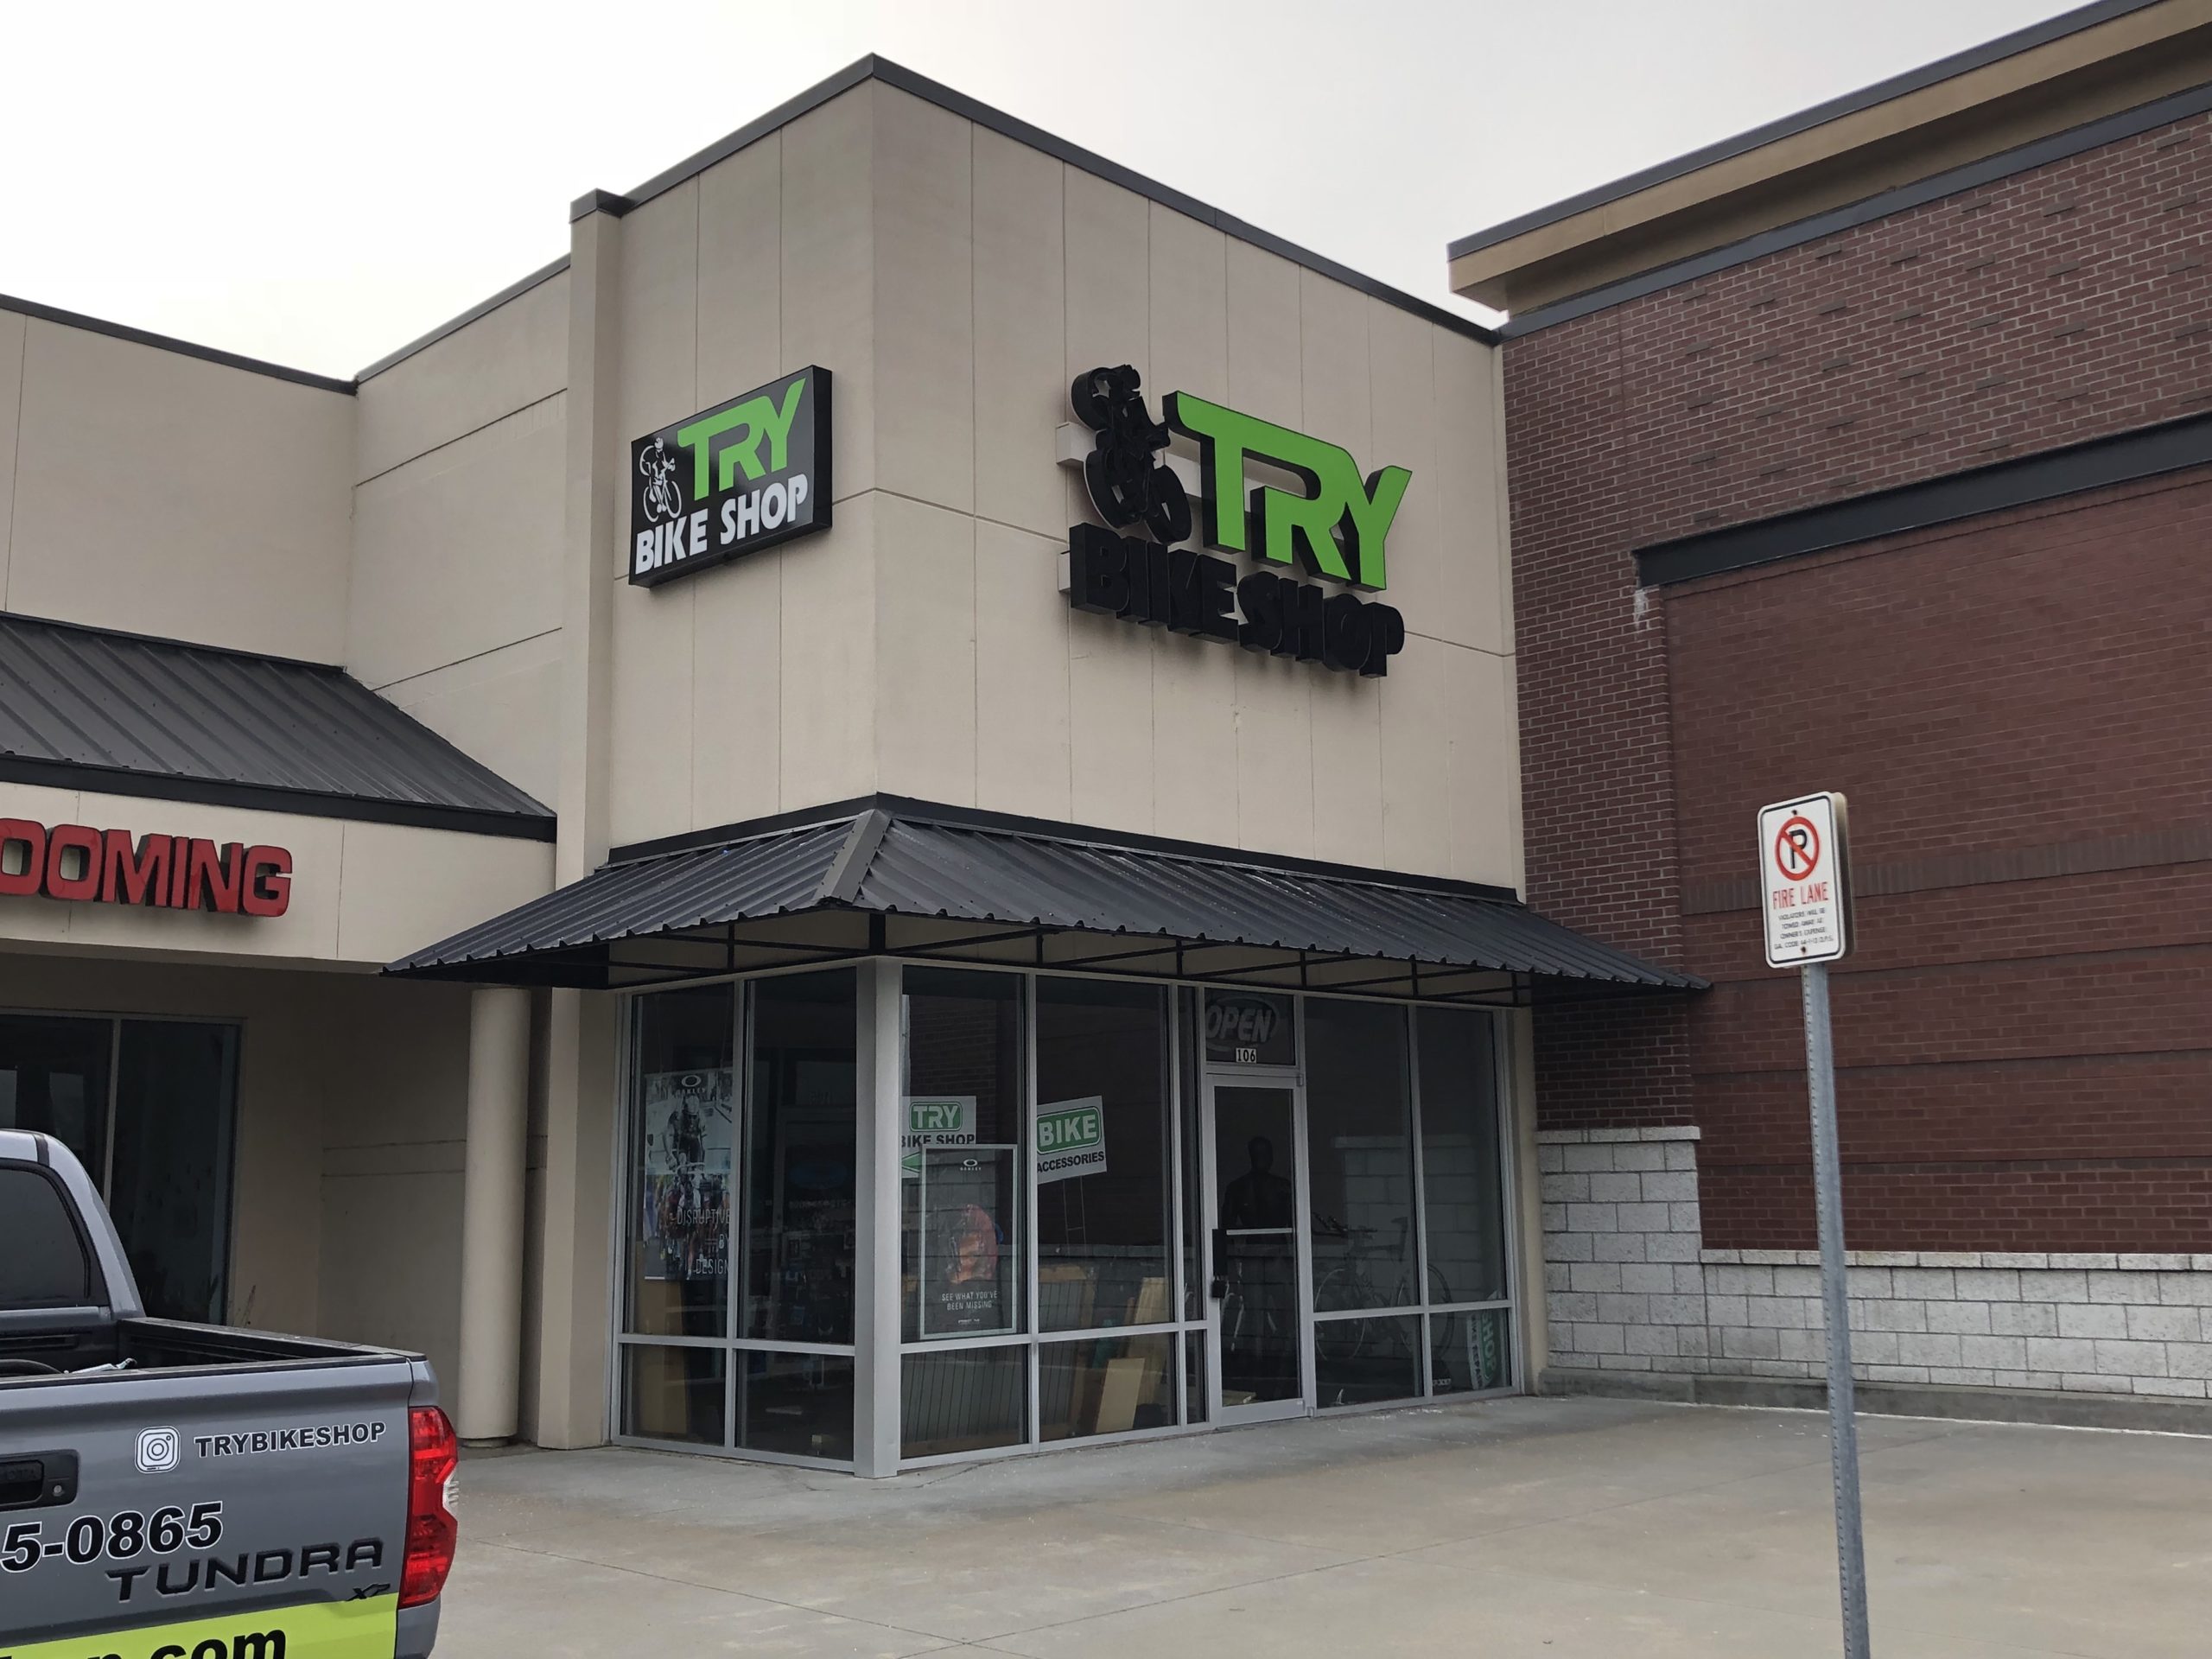 TRY Bike Shop Storefront, Roswell, Georgia, USA